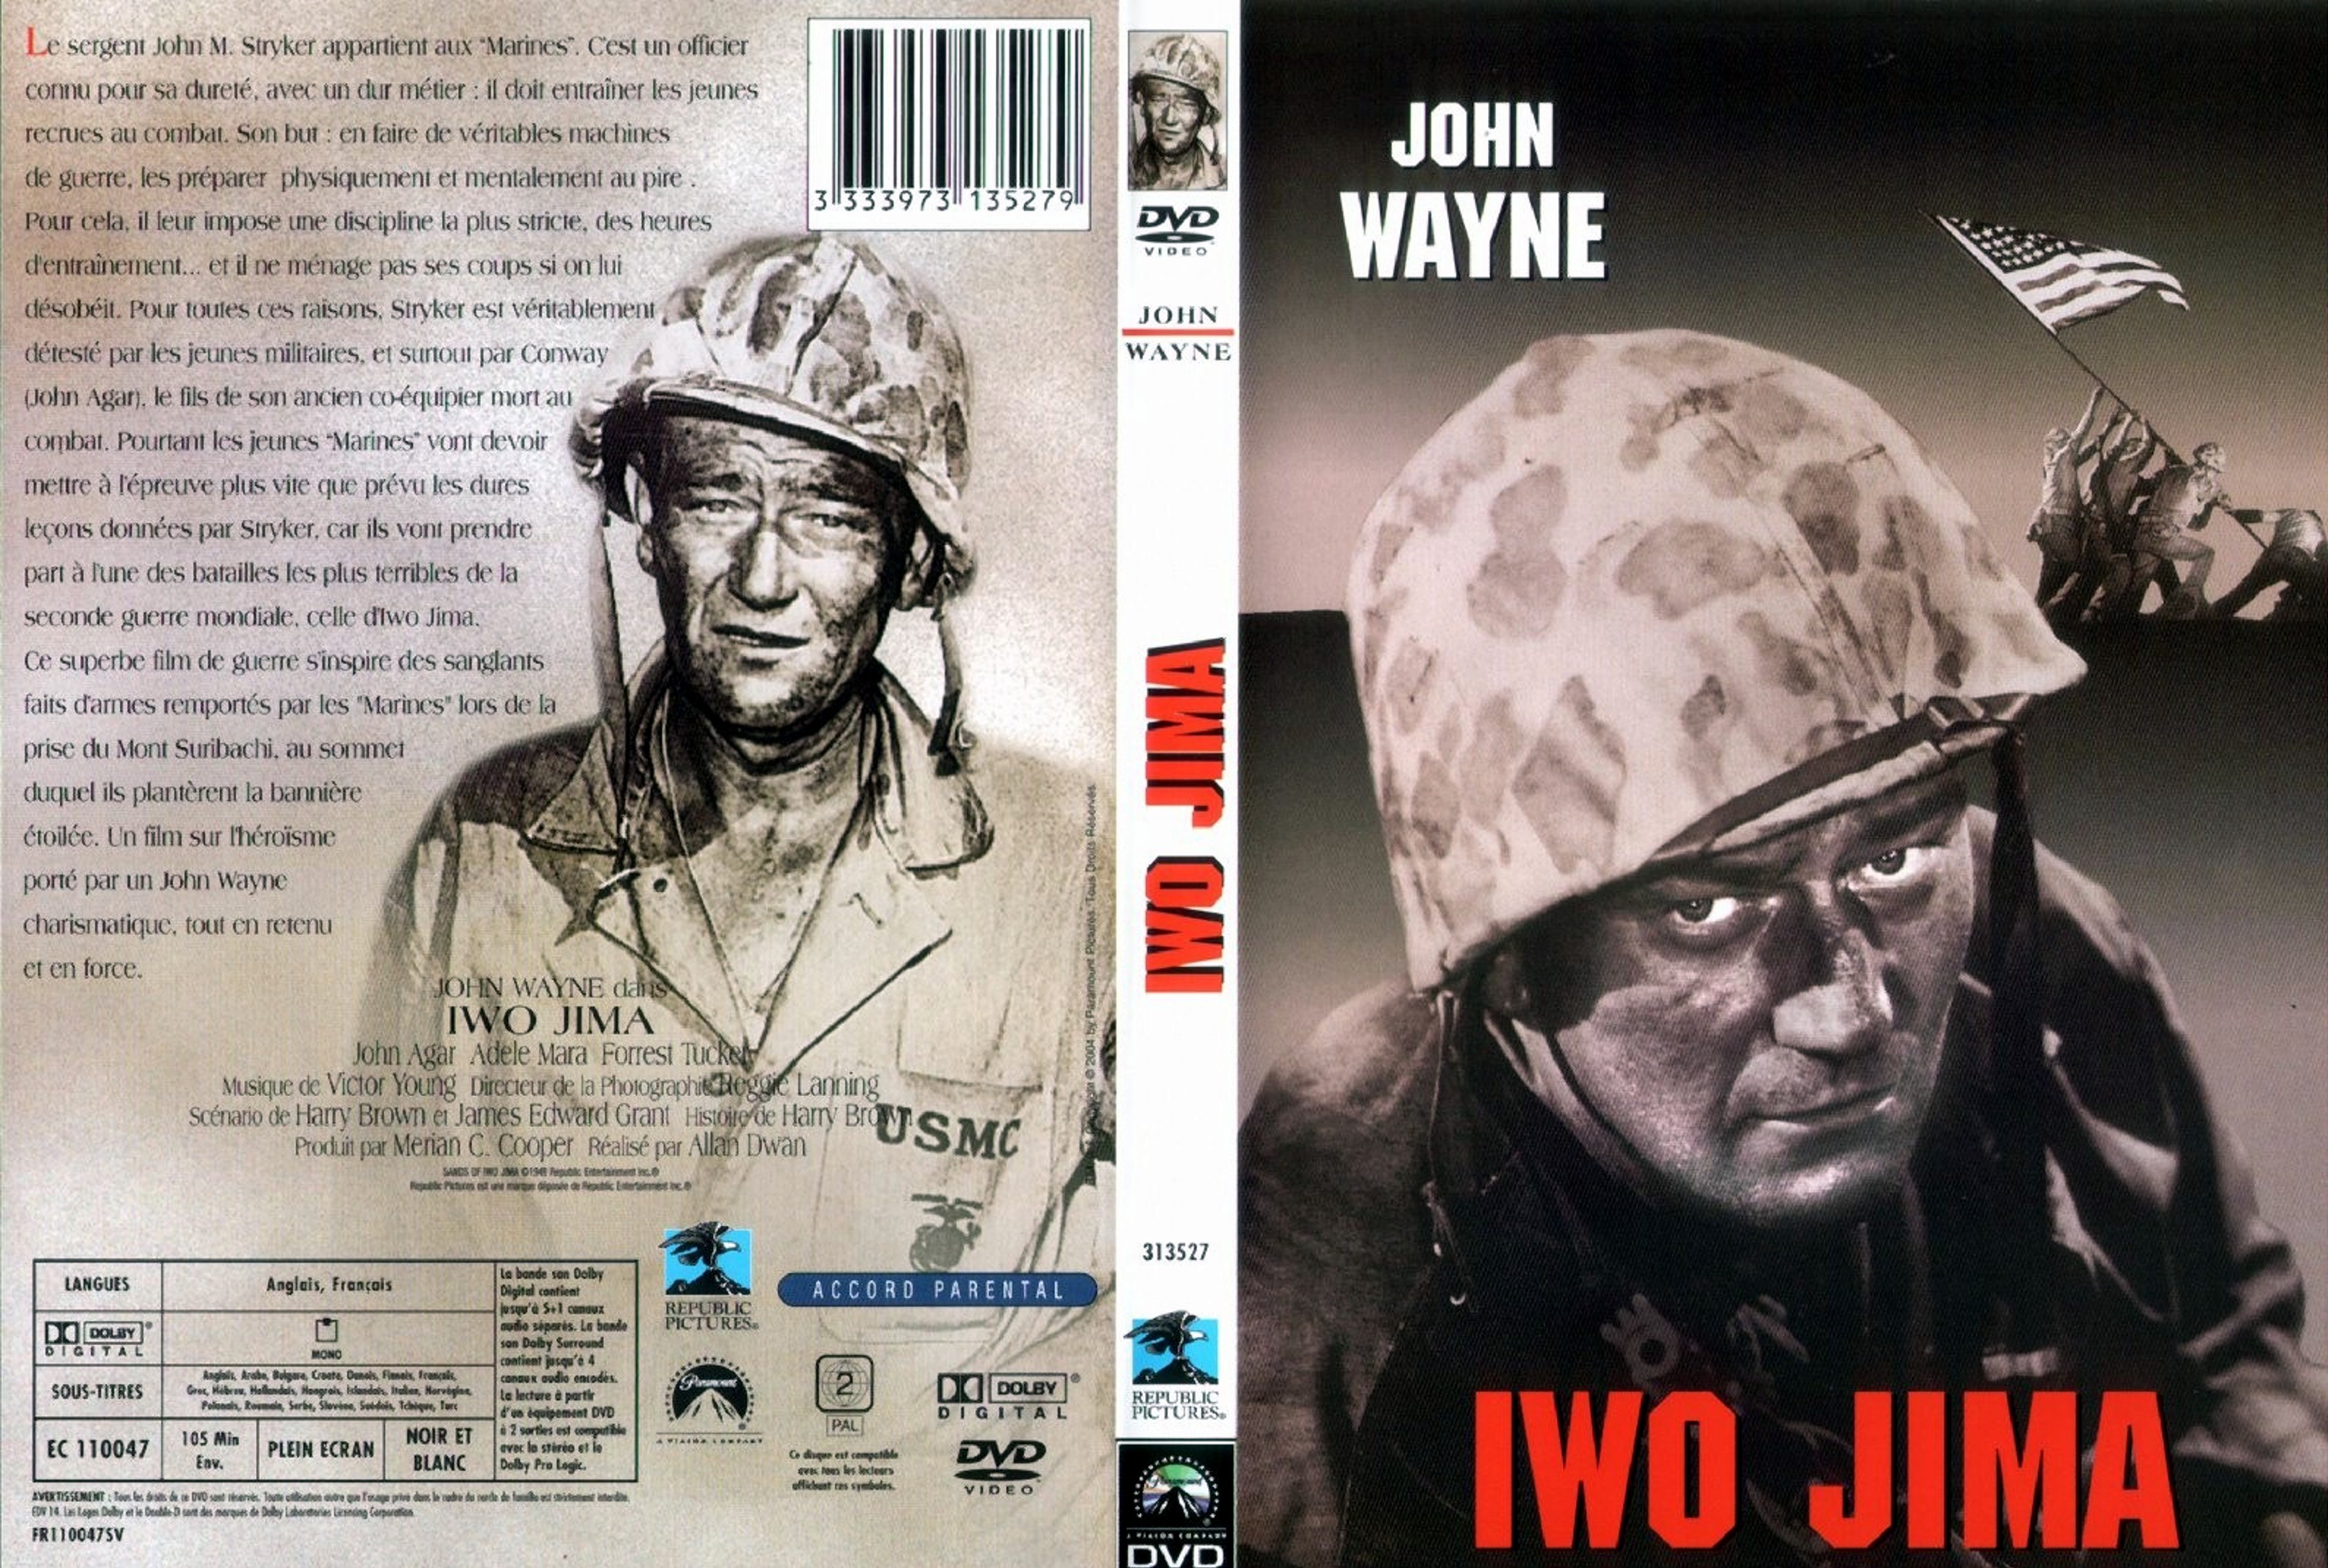 Jaquette DVD Iwo Jima v2